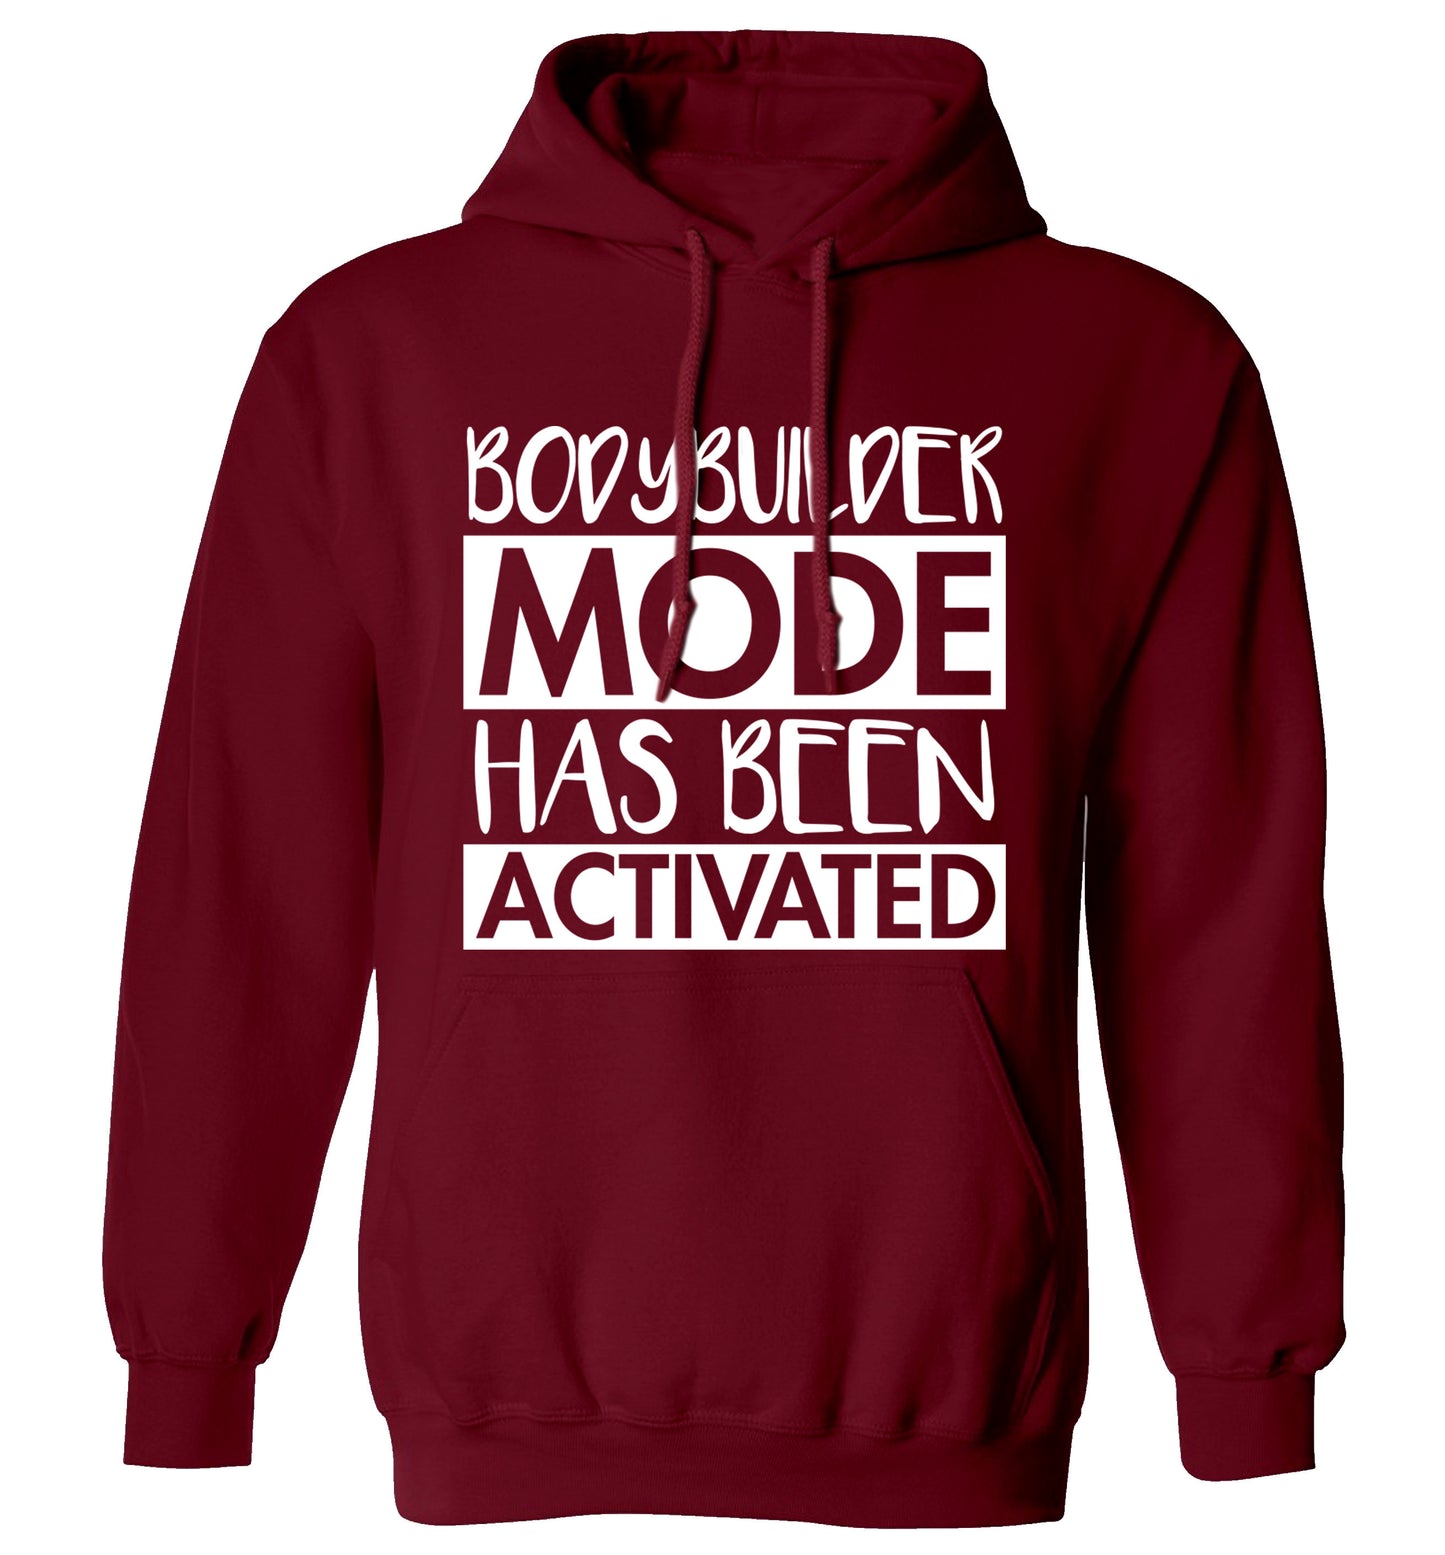 Bodybuilder mode activated adults unisex maroon hoodie 2XL